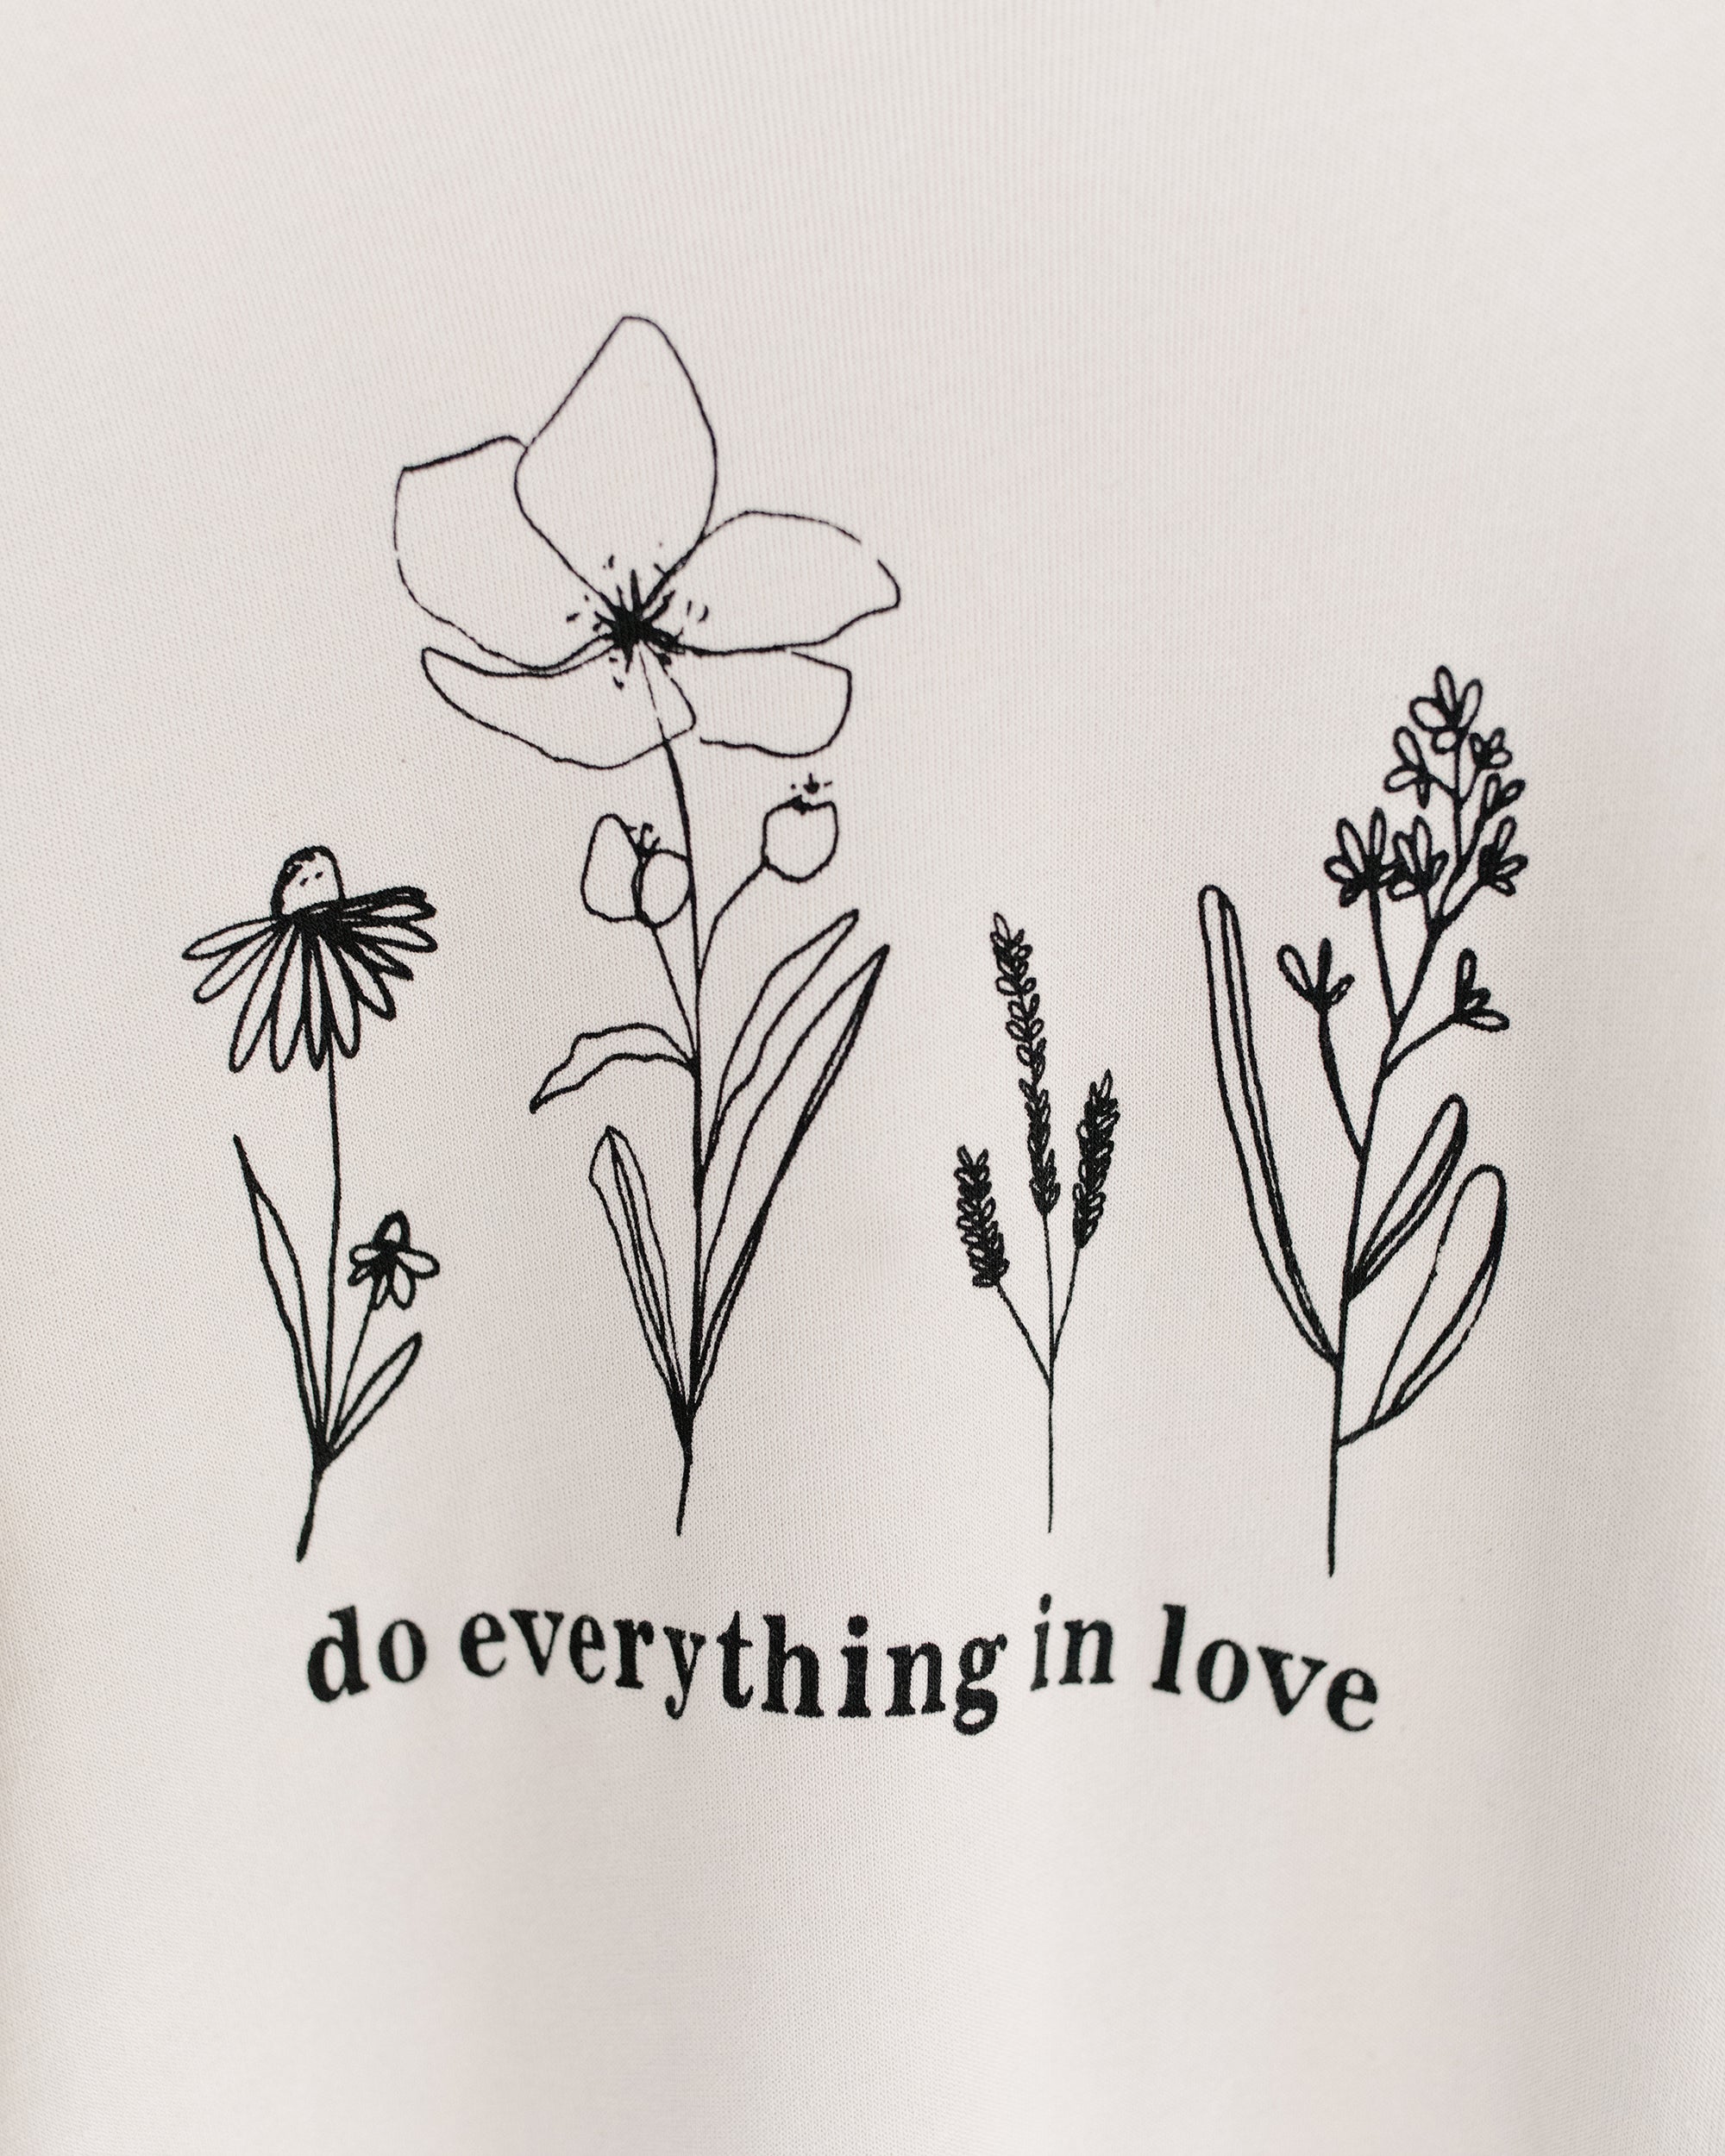 Do Everything in Love Heather Dust Sweatshirt